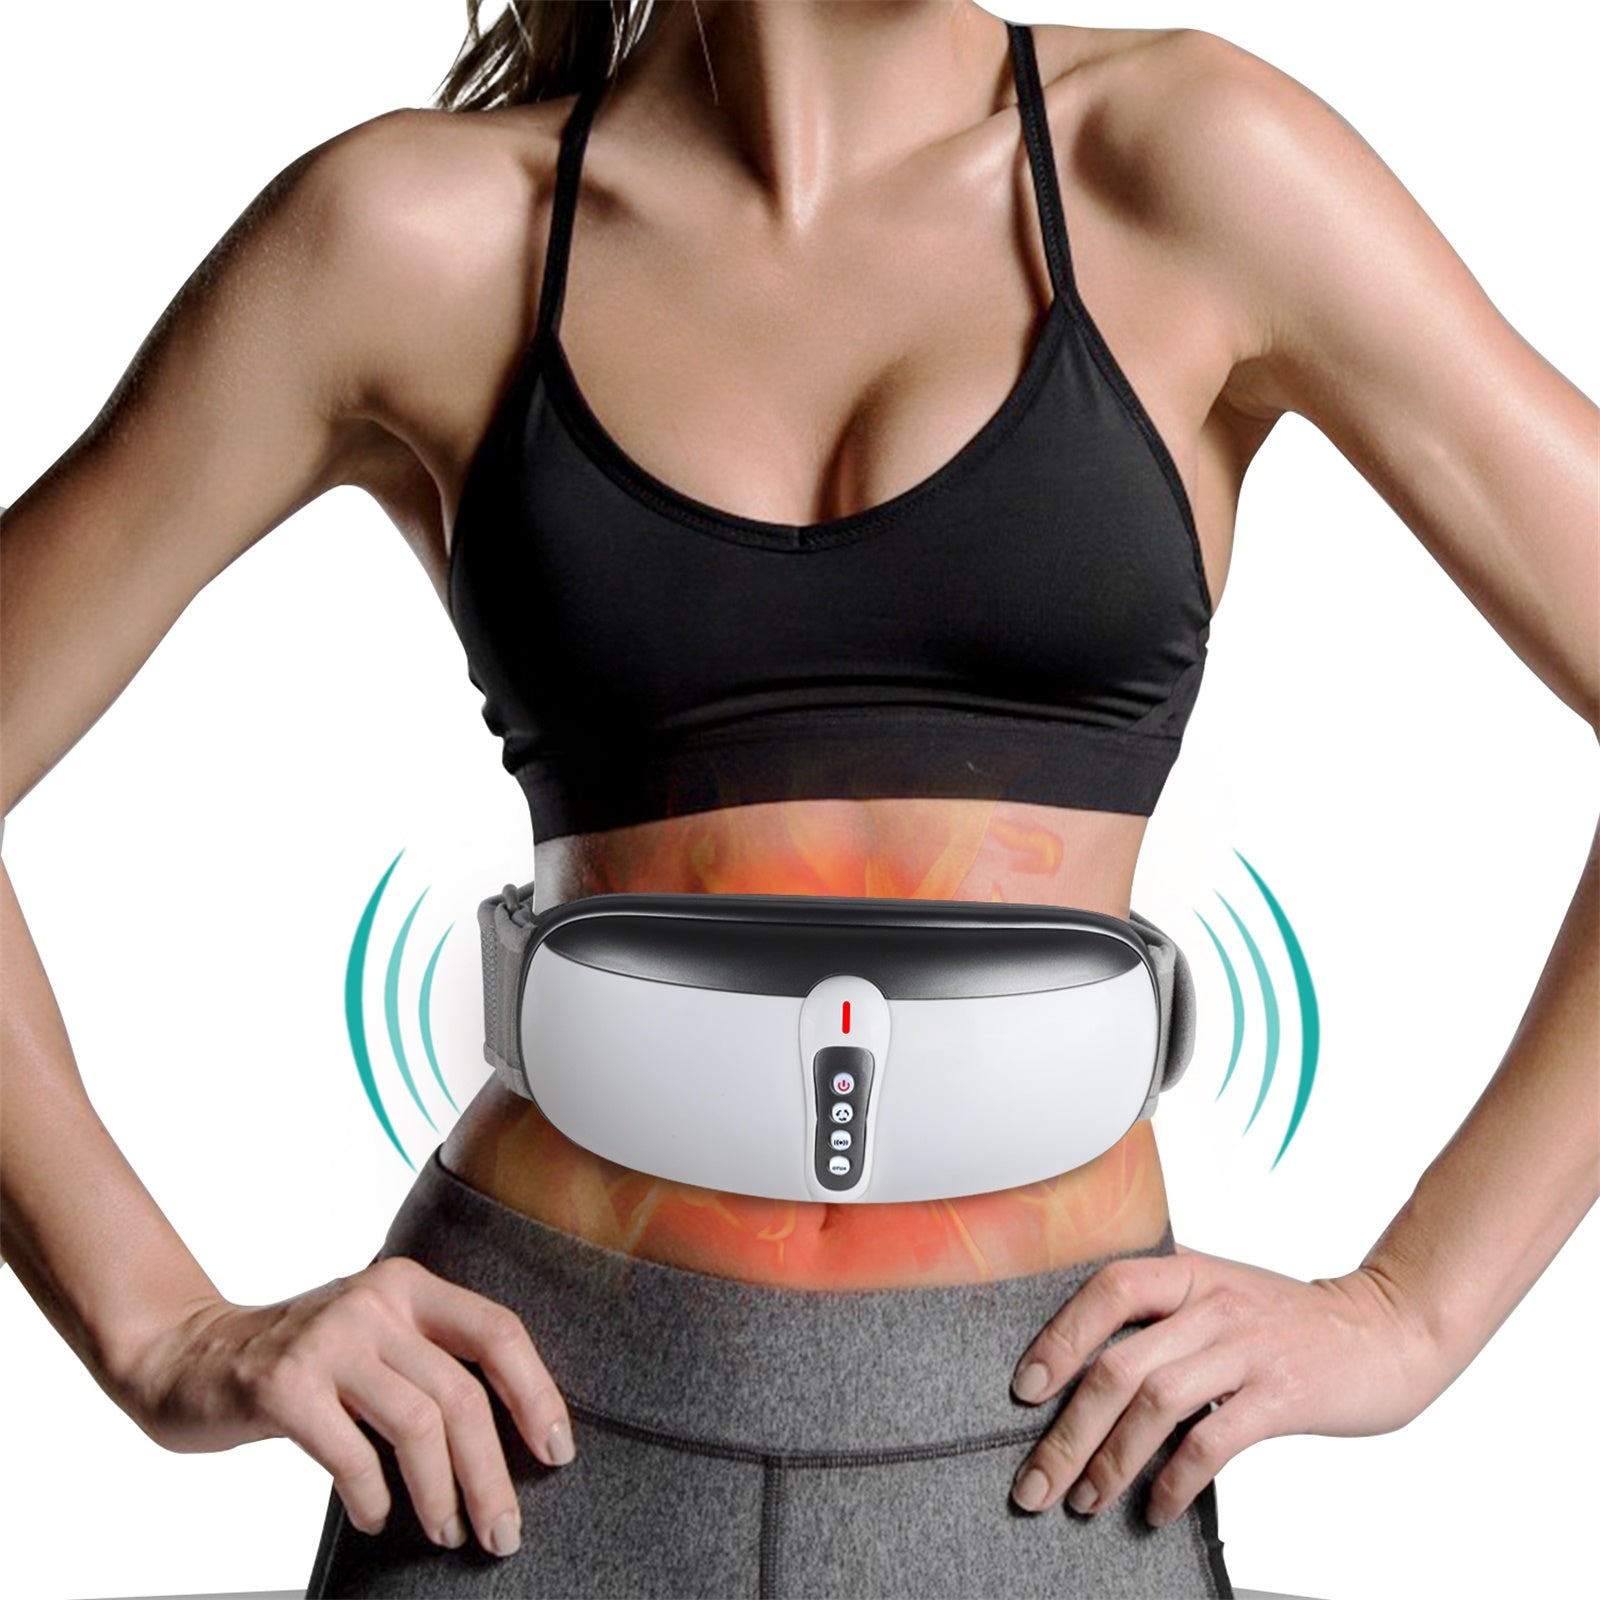 Top Quality Store Original Sweat slim belt stomach fat loss belt